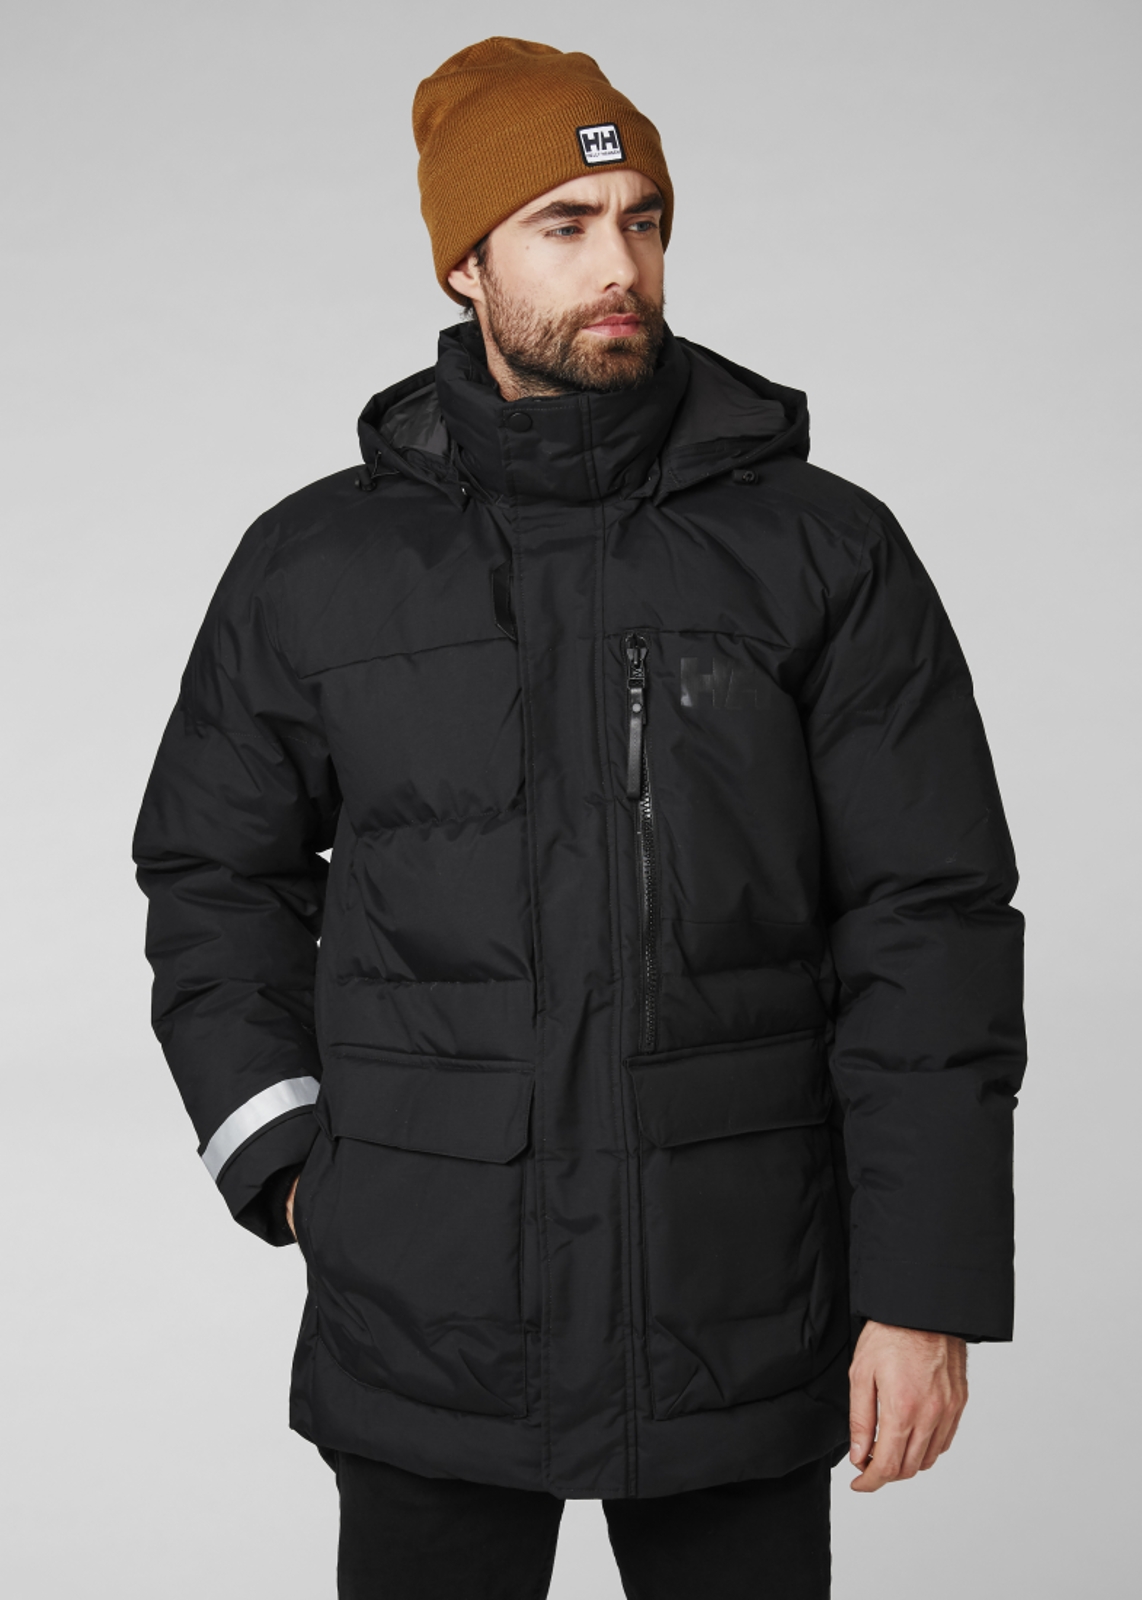 Helly Hansen Mens Tromsoe Insulated Waterproof Jacket - Black: XL ...